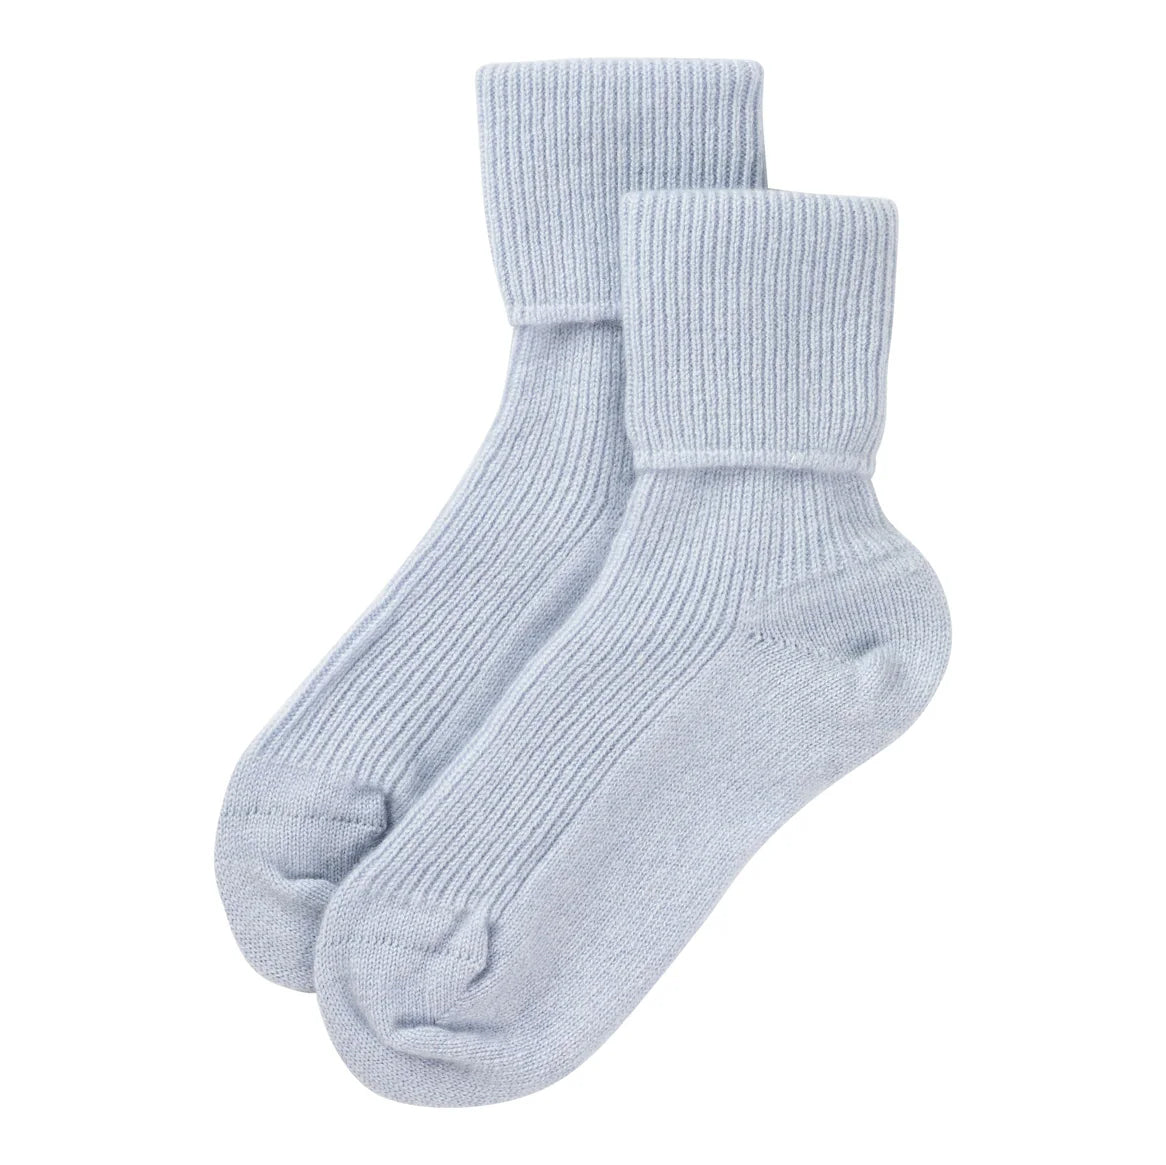 Ladies Cashmere Socks - Pale Blue/Silver Marl